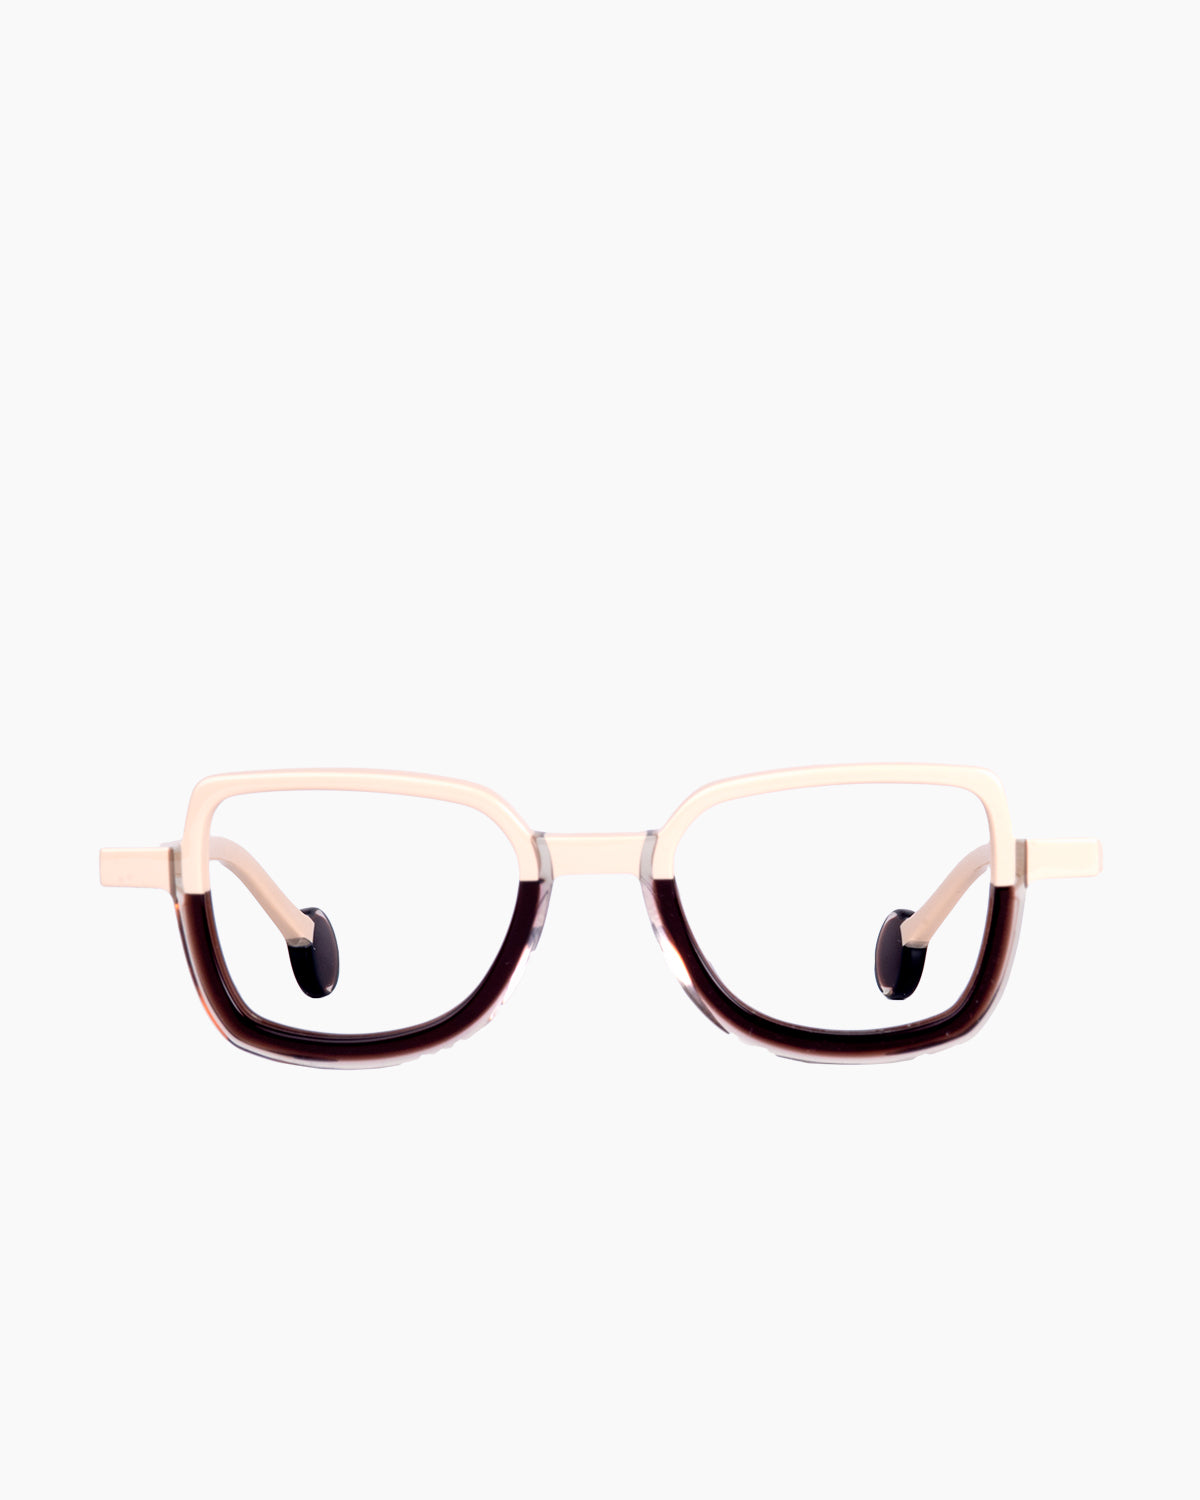 Theo - Schommel - 11 | glasses bar